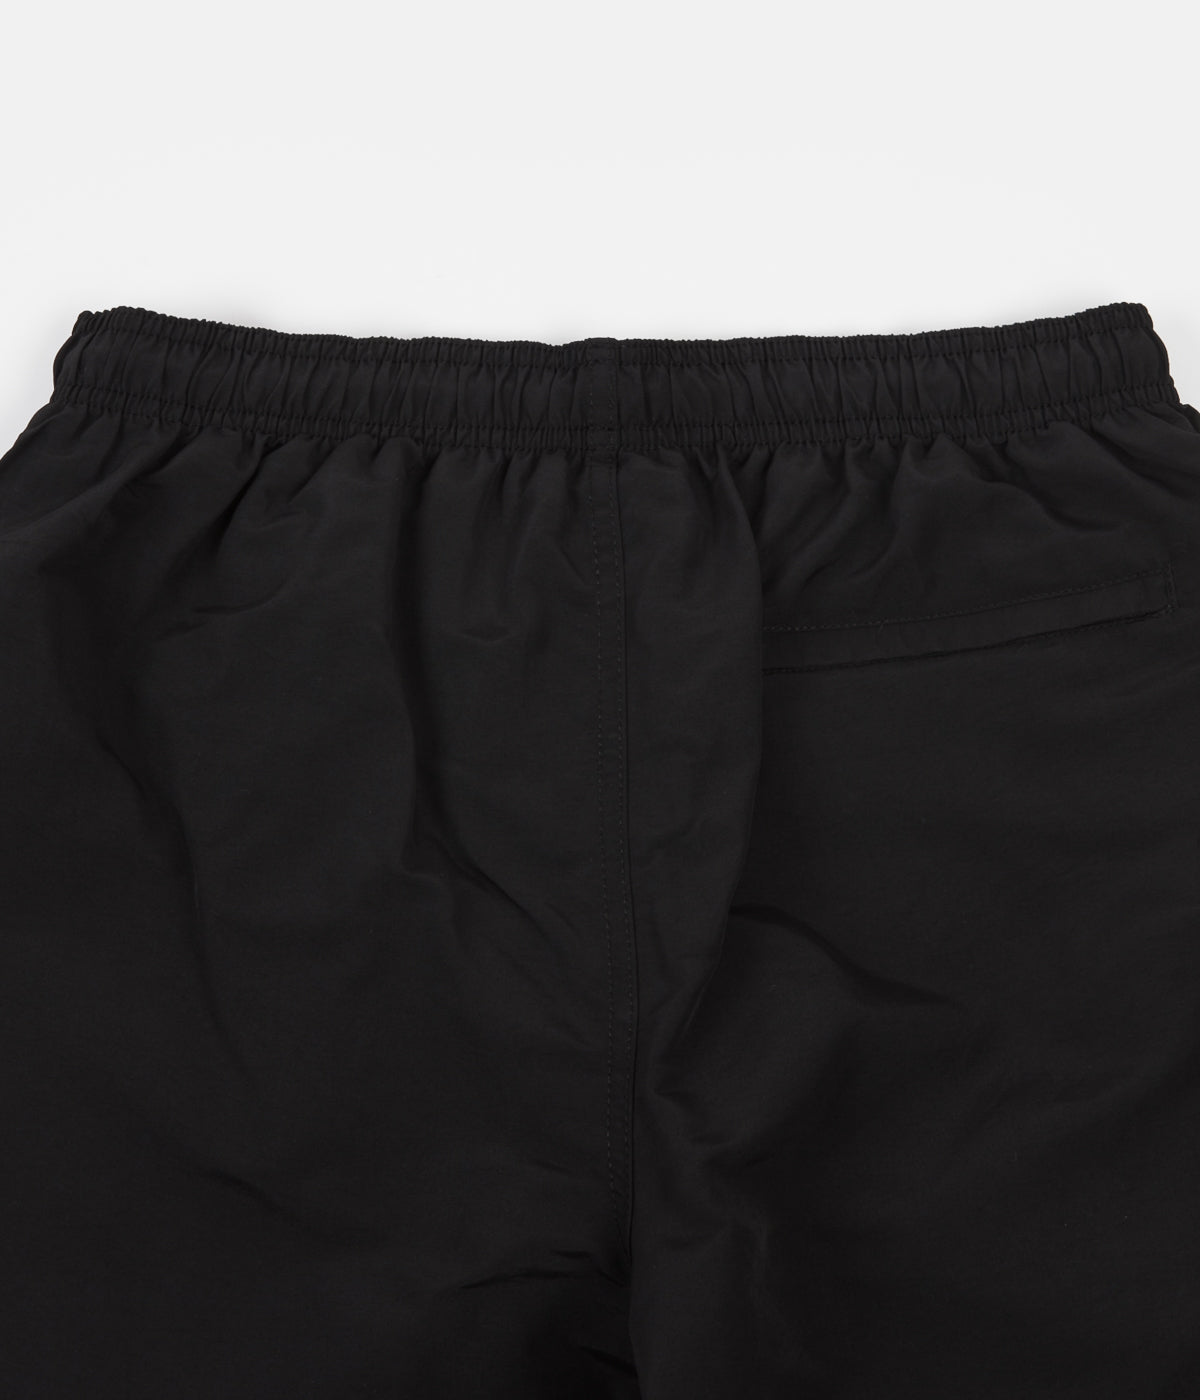 Stussy Stock Water Shorts - Black | Flatspot